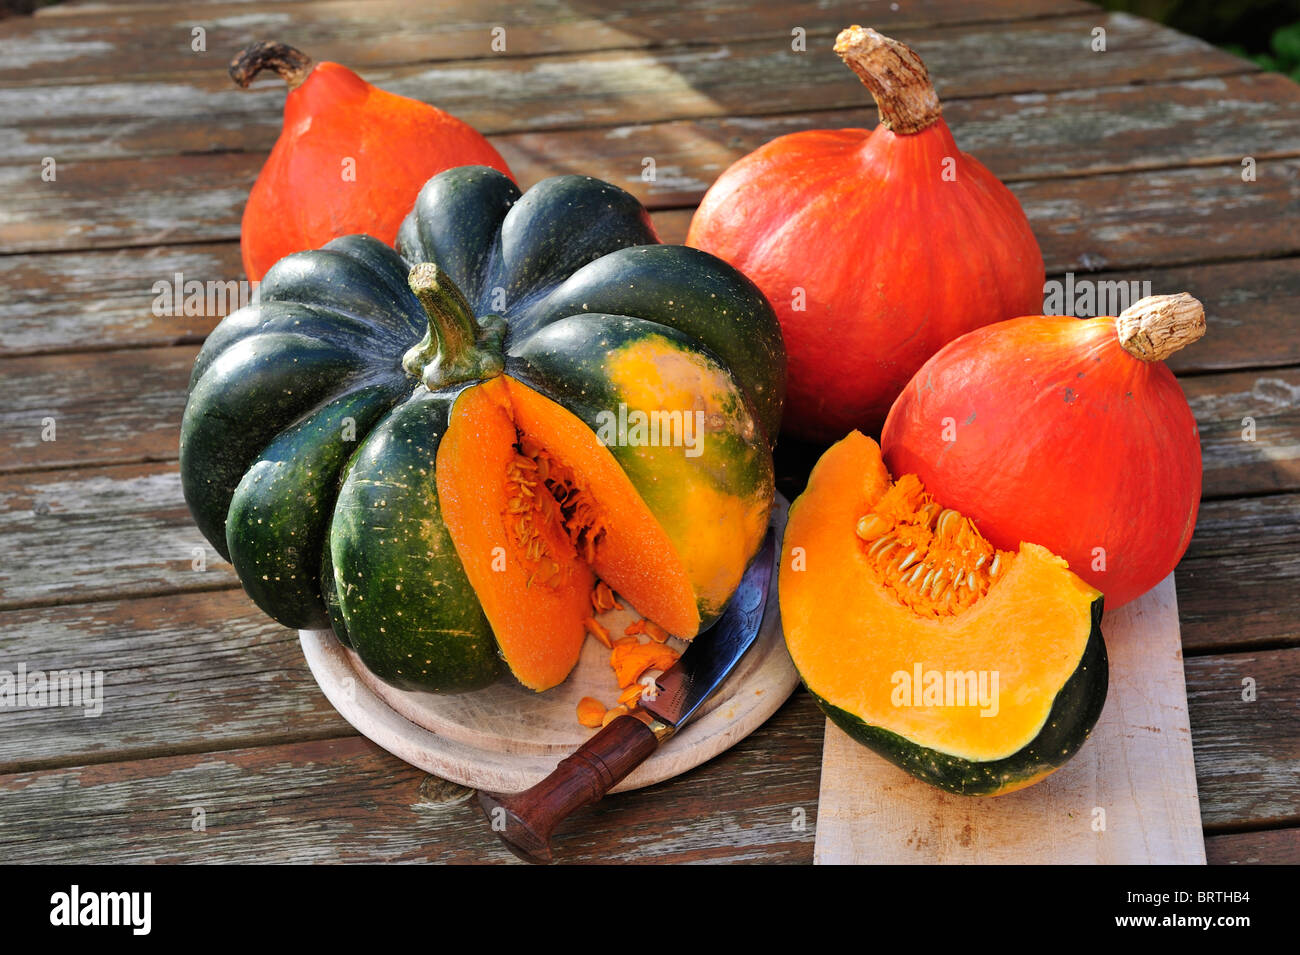 Cut of green Acorn squash and orange Hokkaido pumpkins on a wooden board. Stock Photo